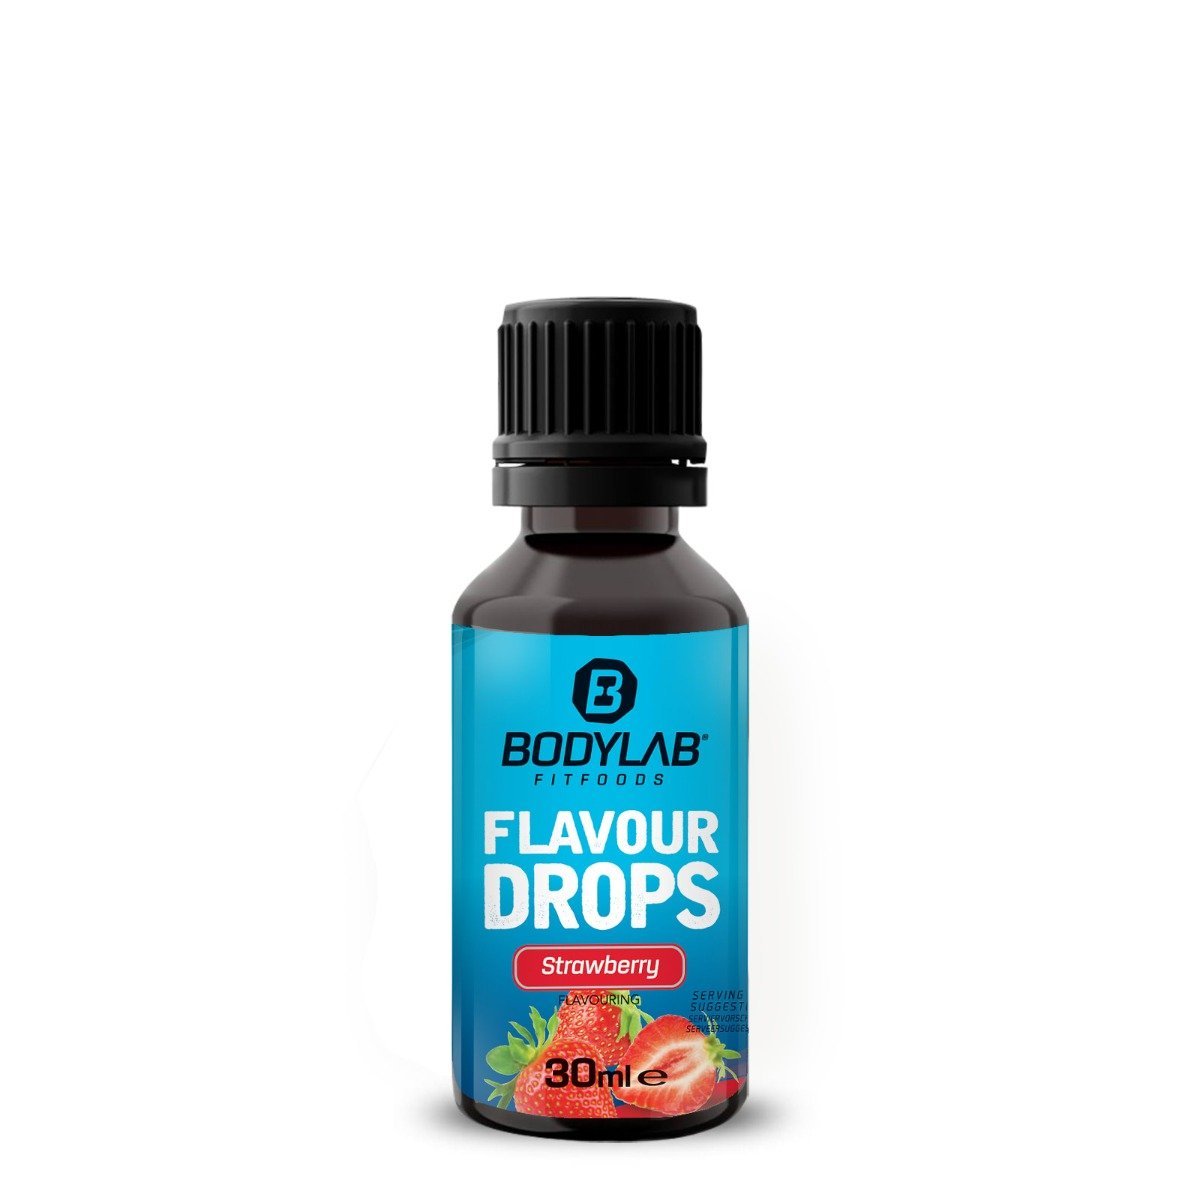 E-shop Flavour Drops - Bodylab24, kokos, 30ml